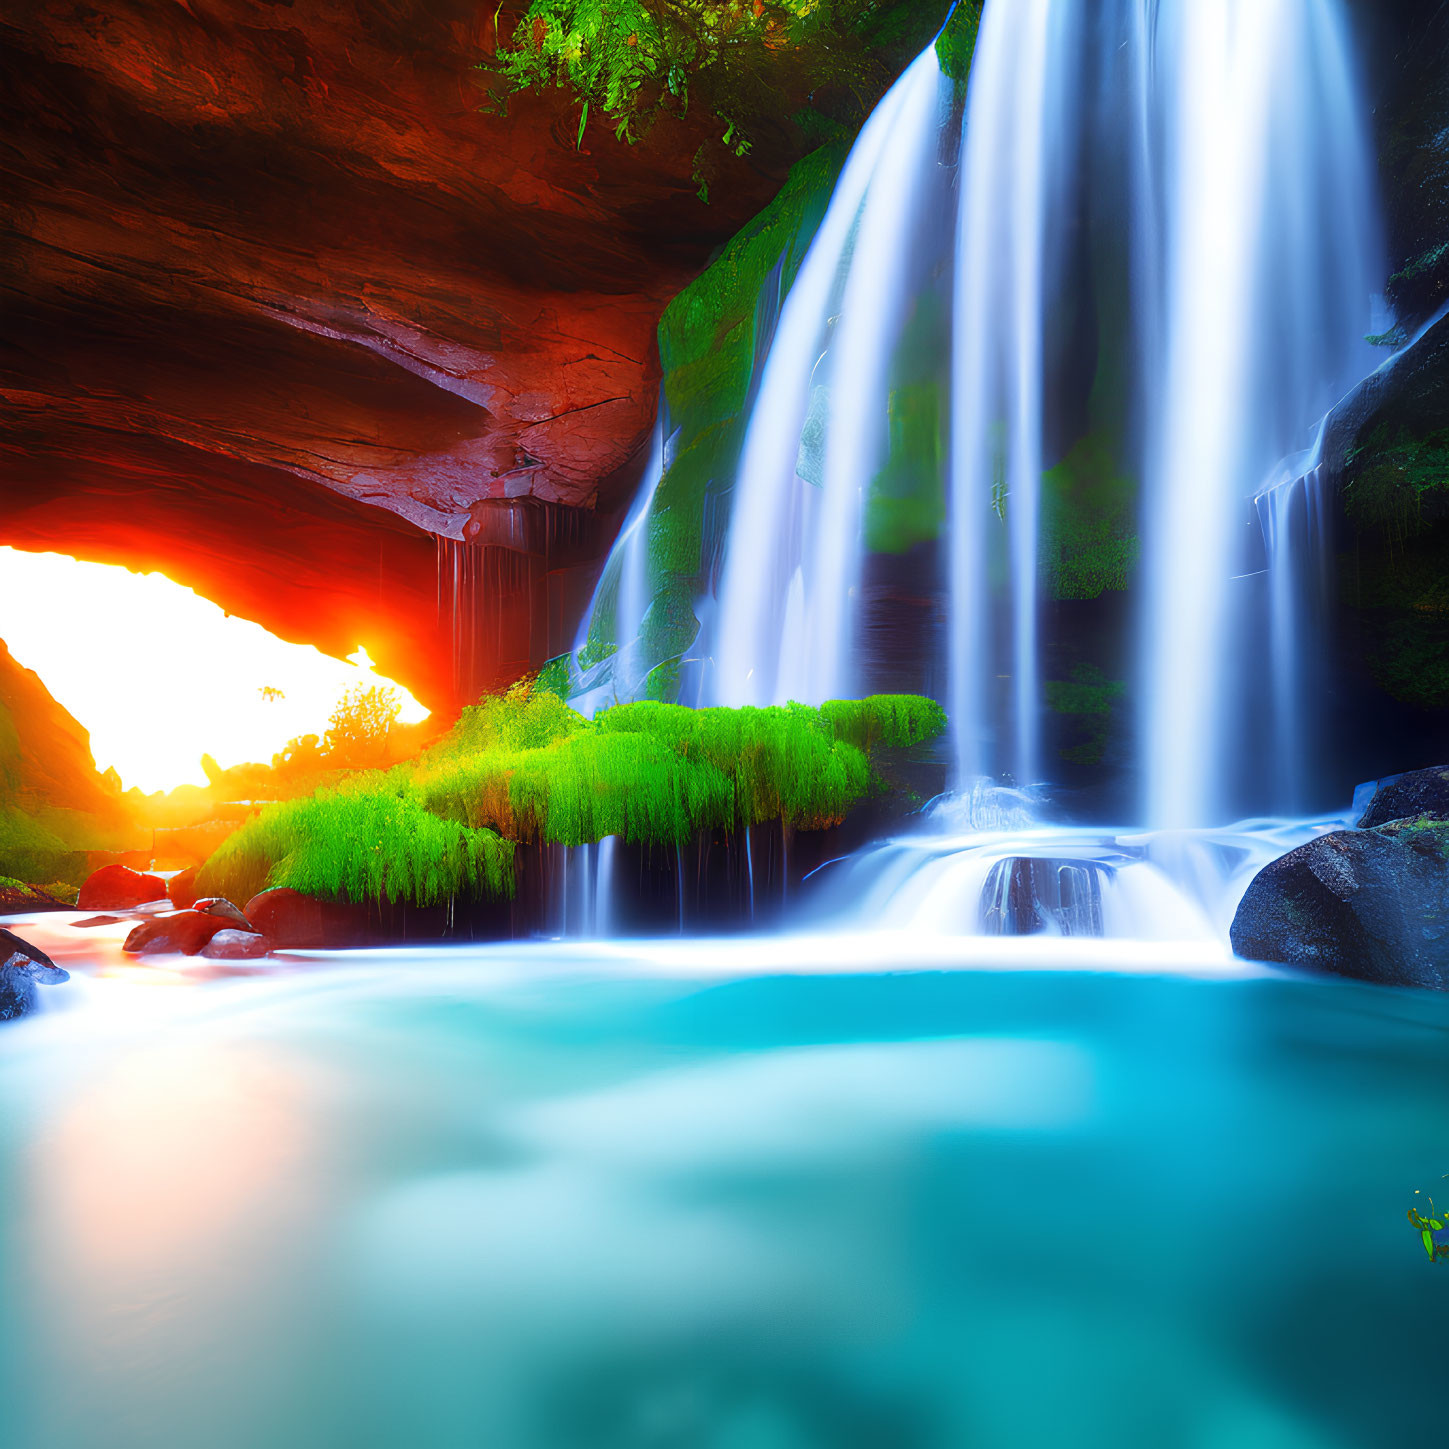 Scenic waterfall in lush greenery with blue pool